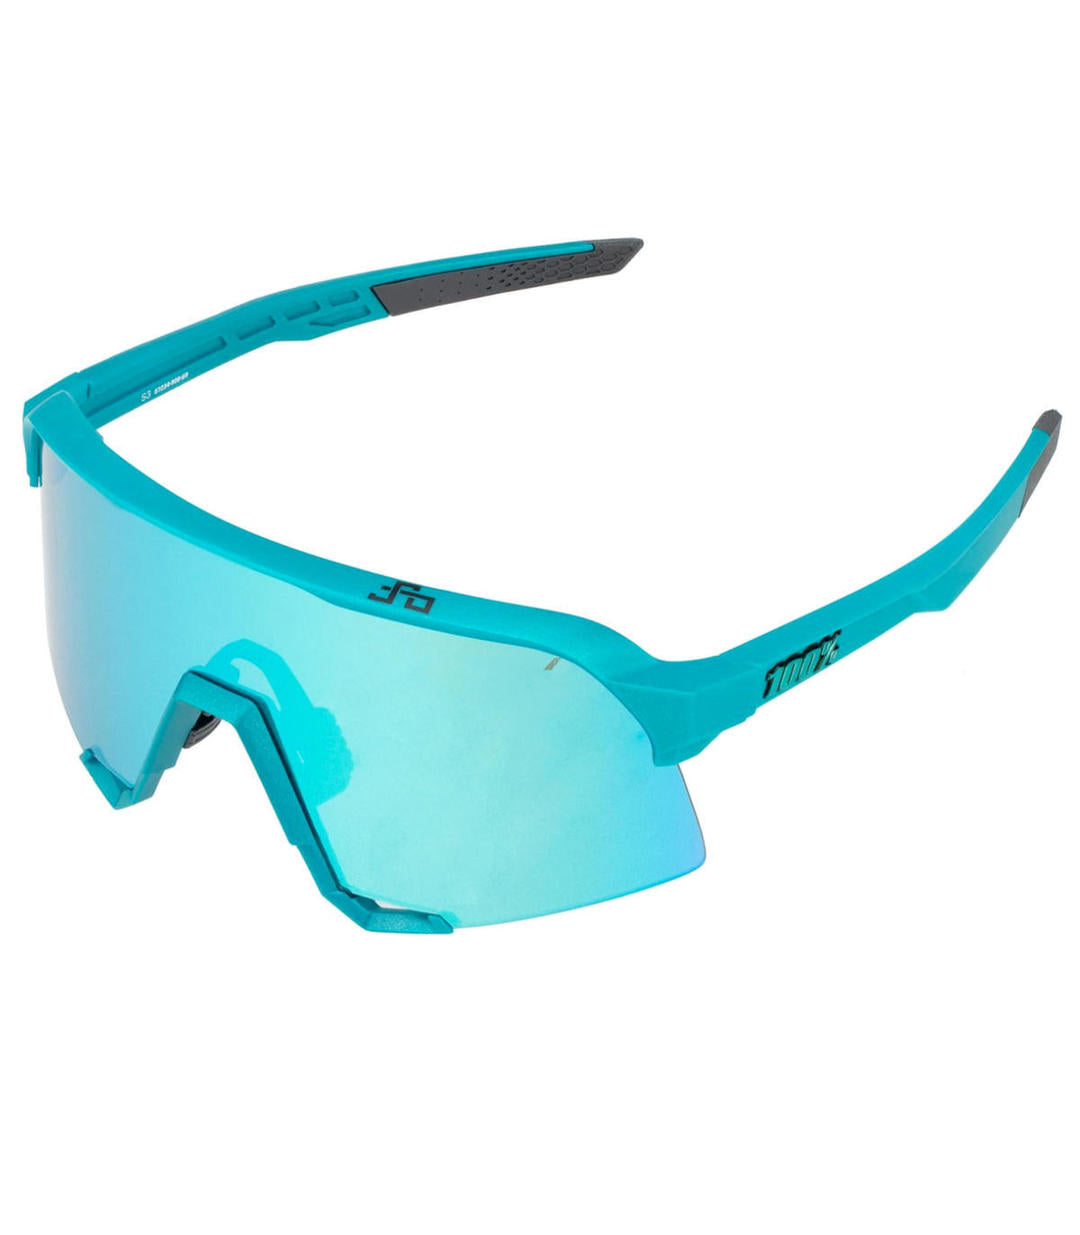 RIDE 100% Gafas de Sol S3 Peter Sagan LE Blue Topaz Multilayer - Azul Topaz